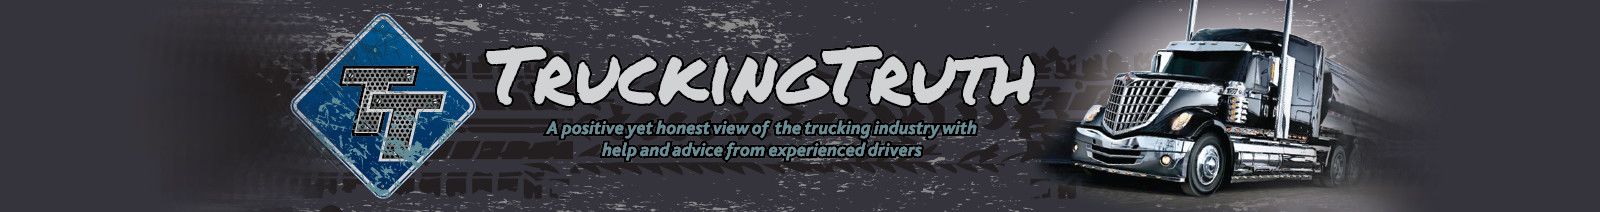 TruckingTruth logo